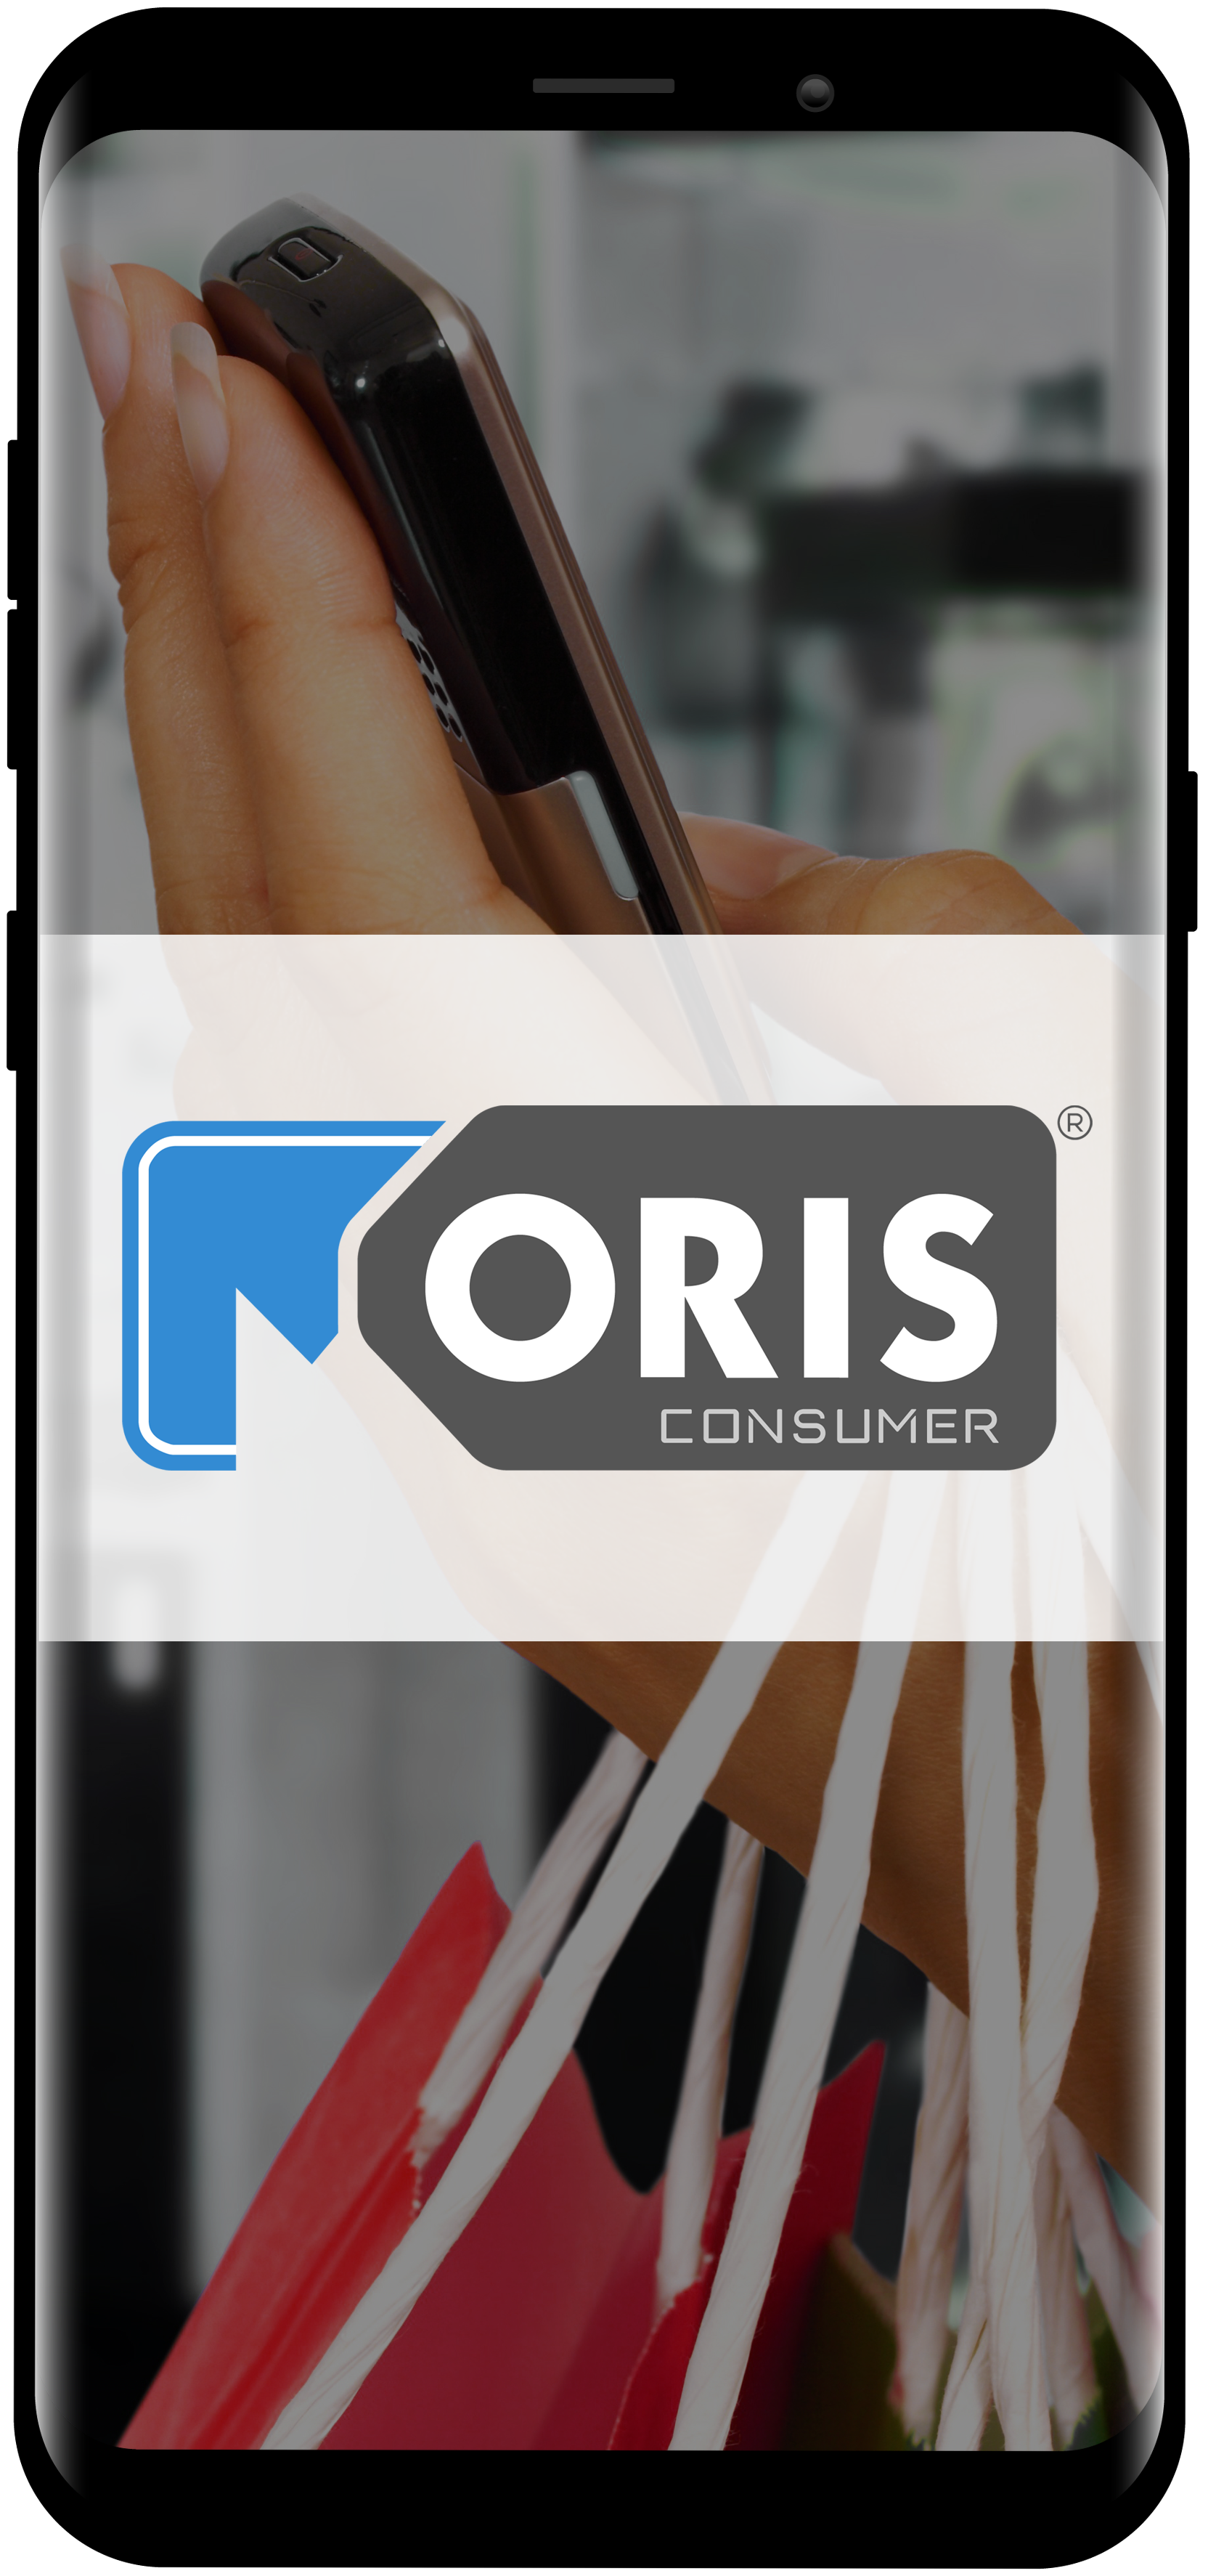 MORIS Consumer mobile phone